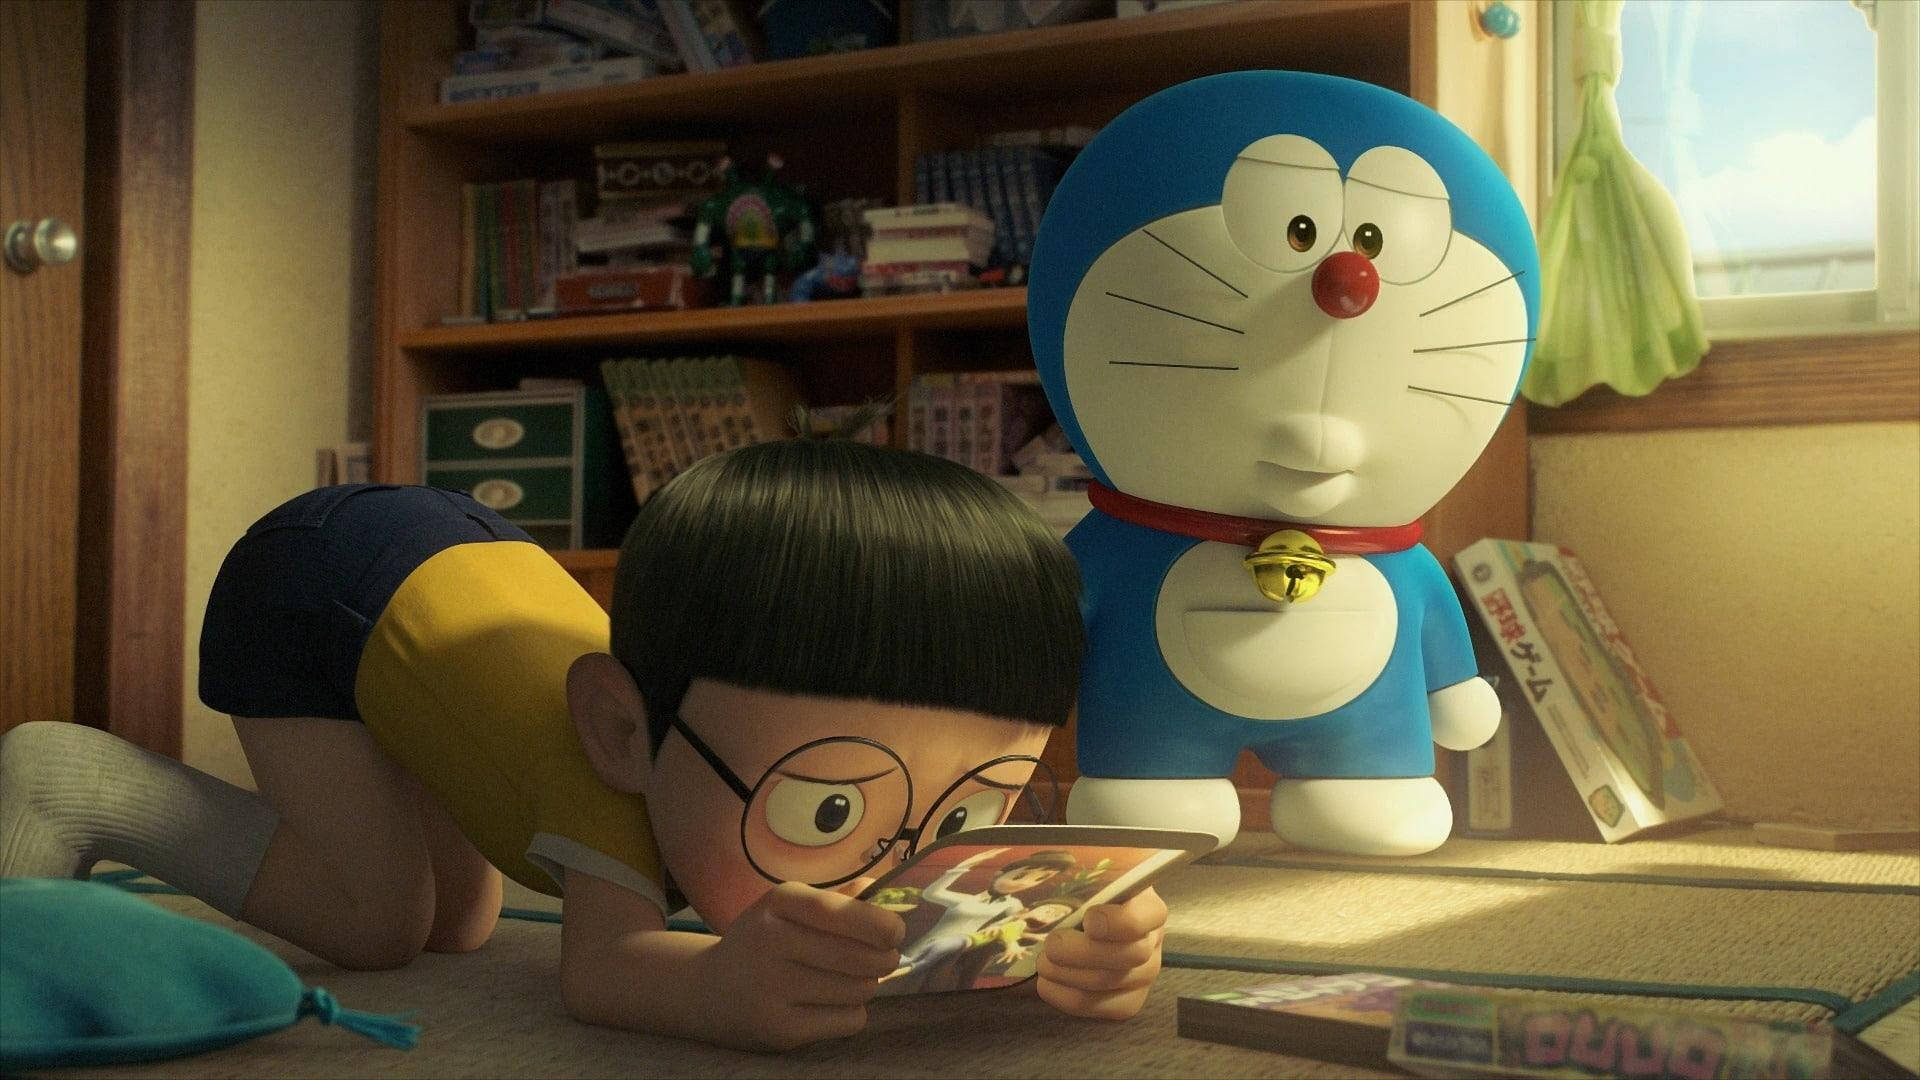 Free Doraemon And Nobita Wallpaper Downloads, [100+] Doraemon And Nobita  Wallpapers for FREE 